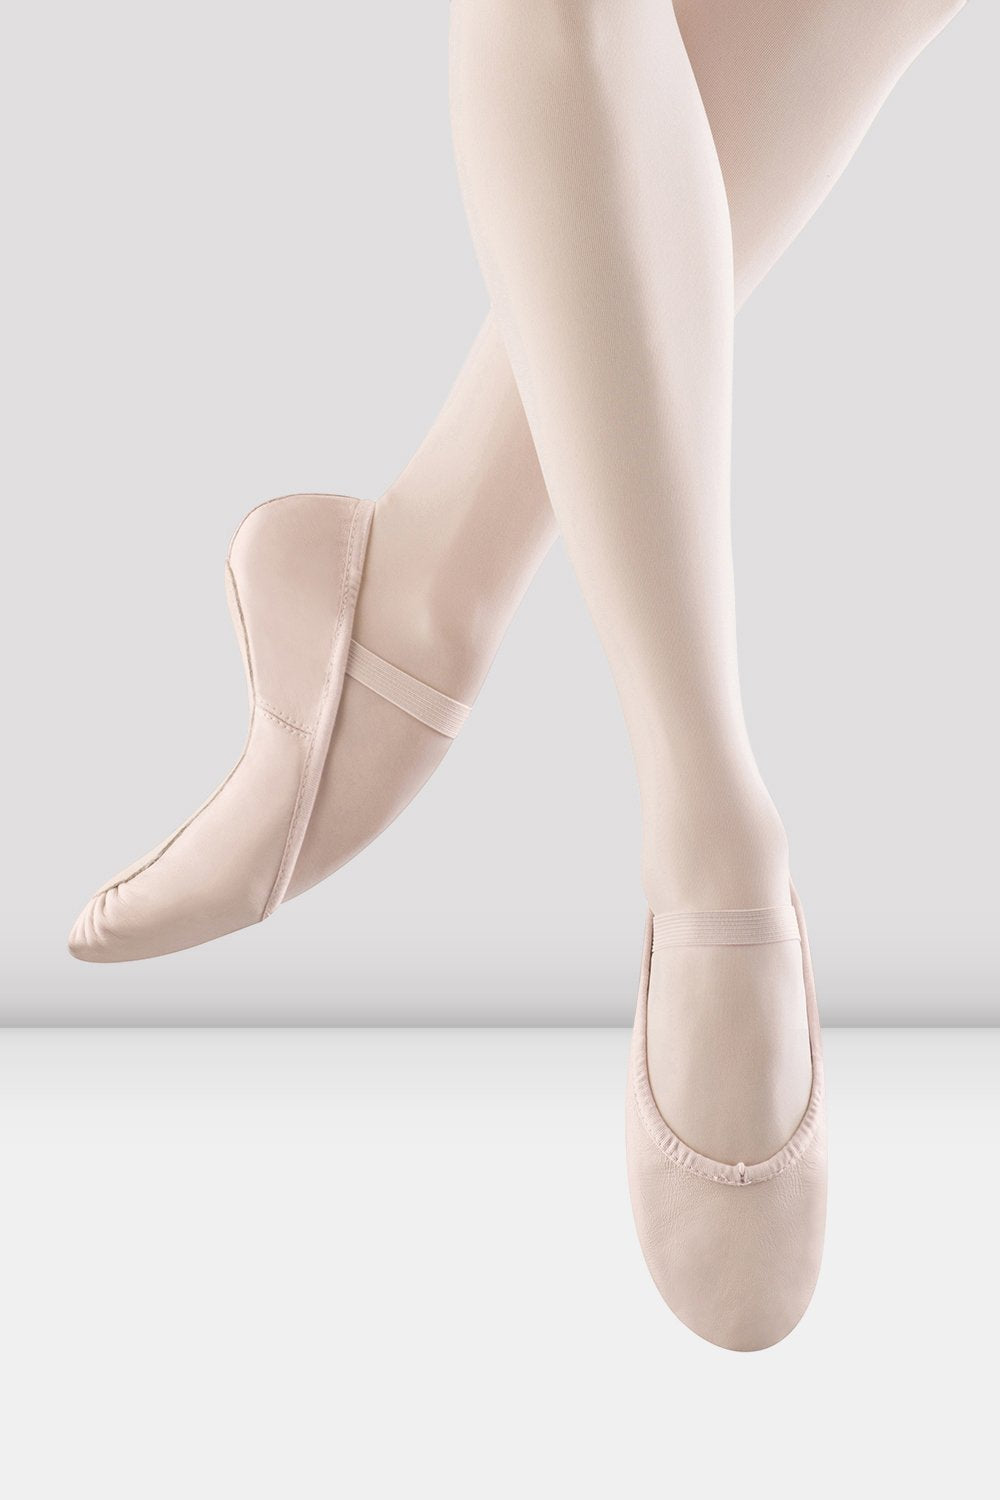 Bloch Adult Dansoft Pink Leather Ballet Shoe